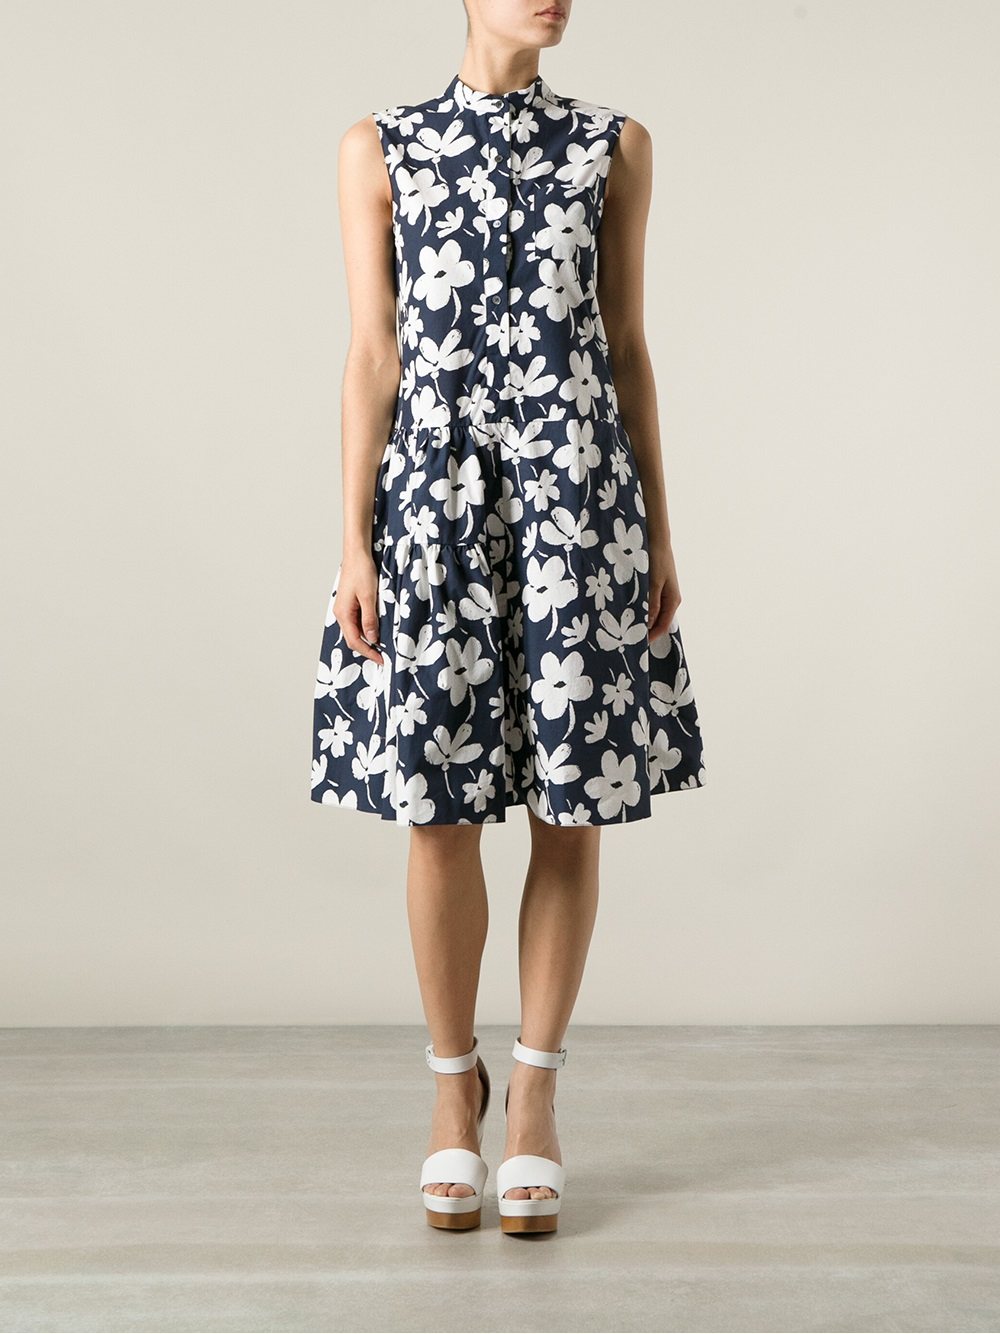 Lyst - Marni Floral Print Dress in Blue